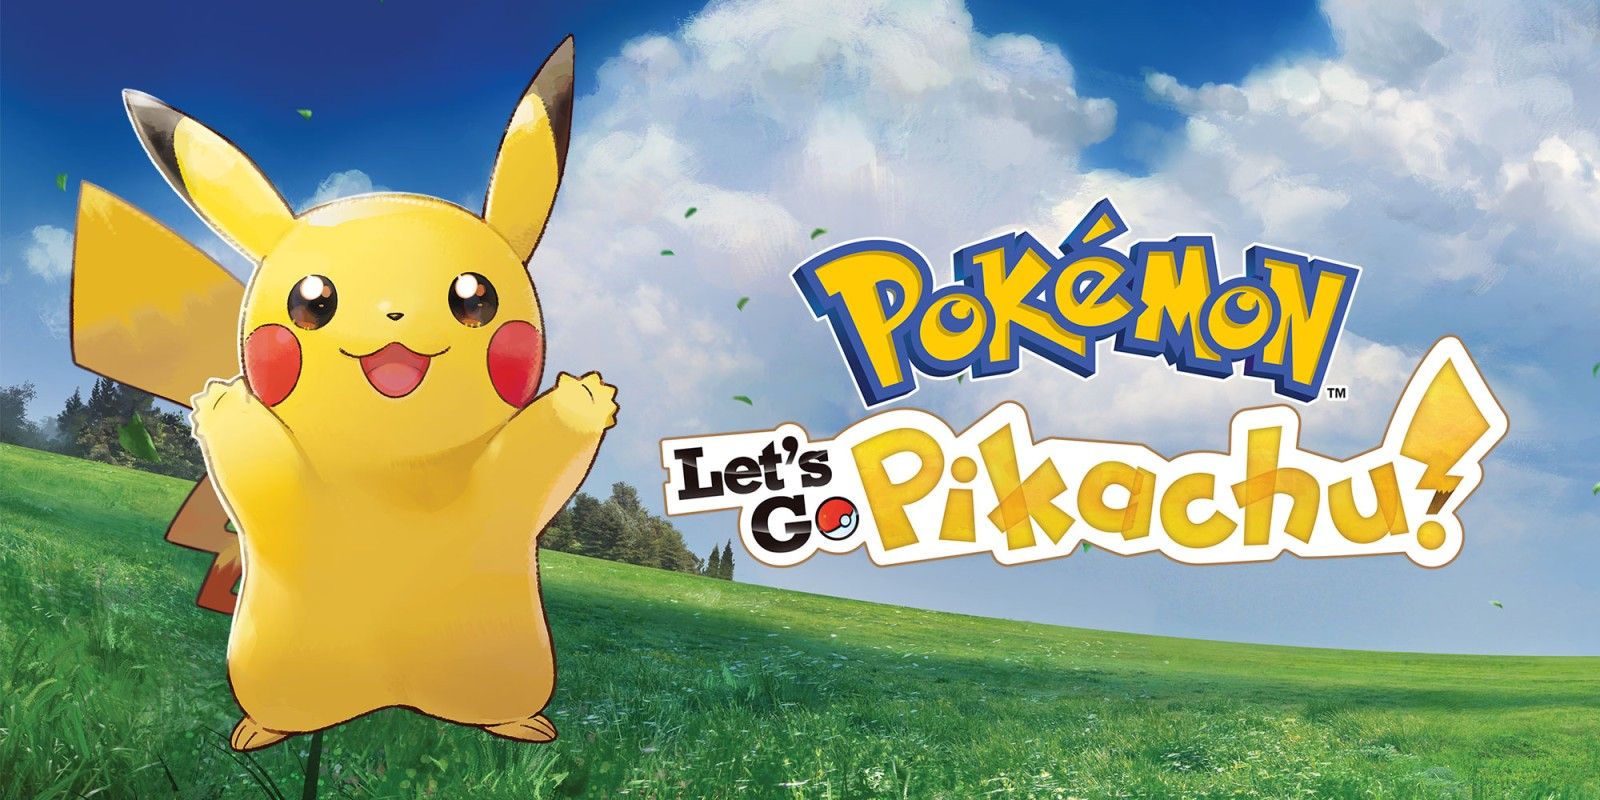 Pokémon Let's Go Pikachu and Let's Go Eevee